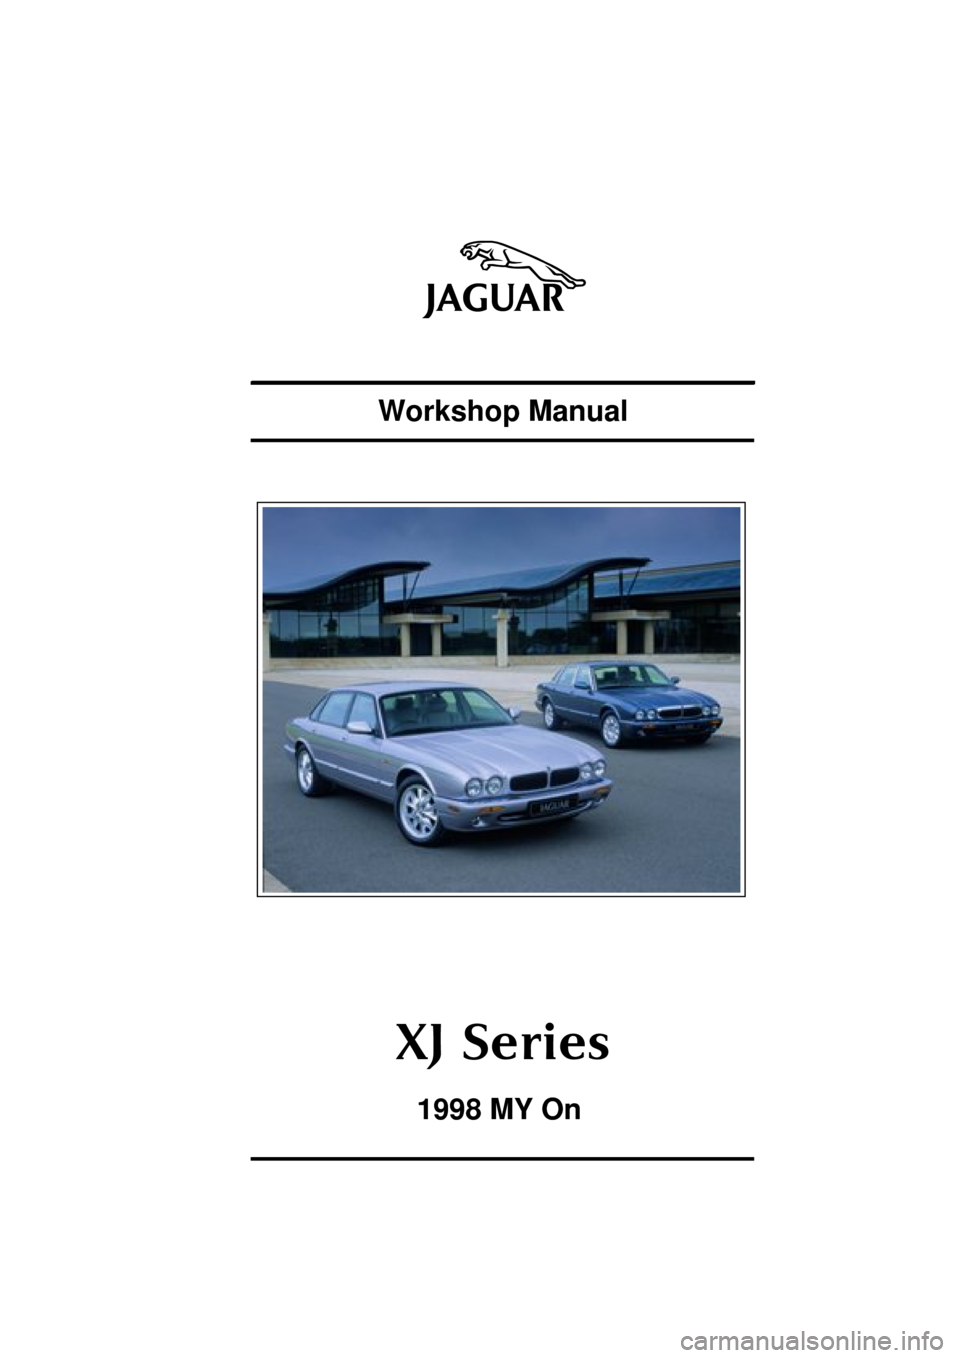 JAGUAR X308 1998 2.G Workshop Manual Workshop Manual
1998 MY OnXJ Series 